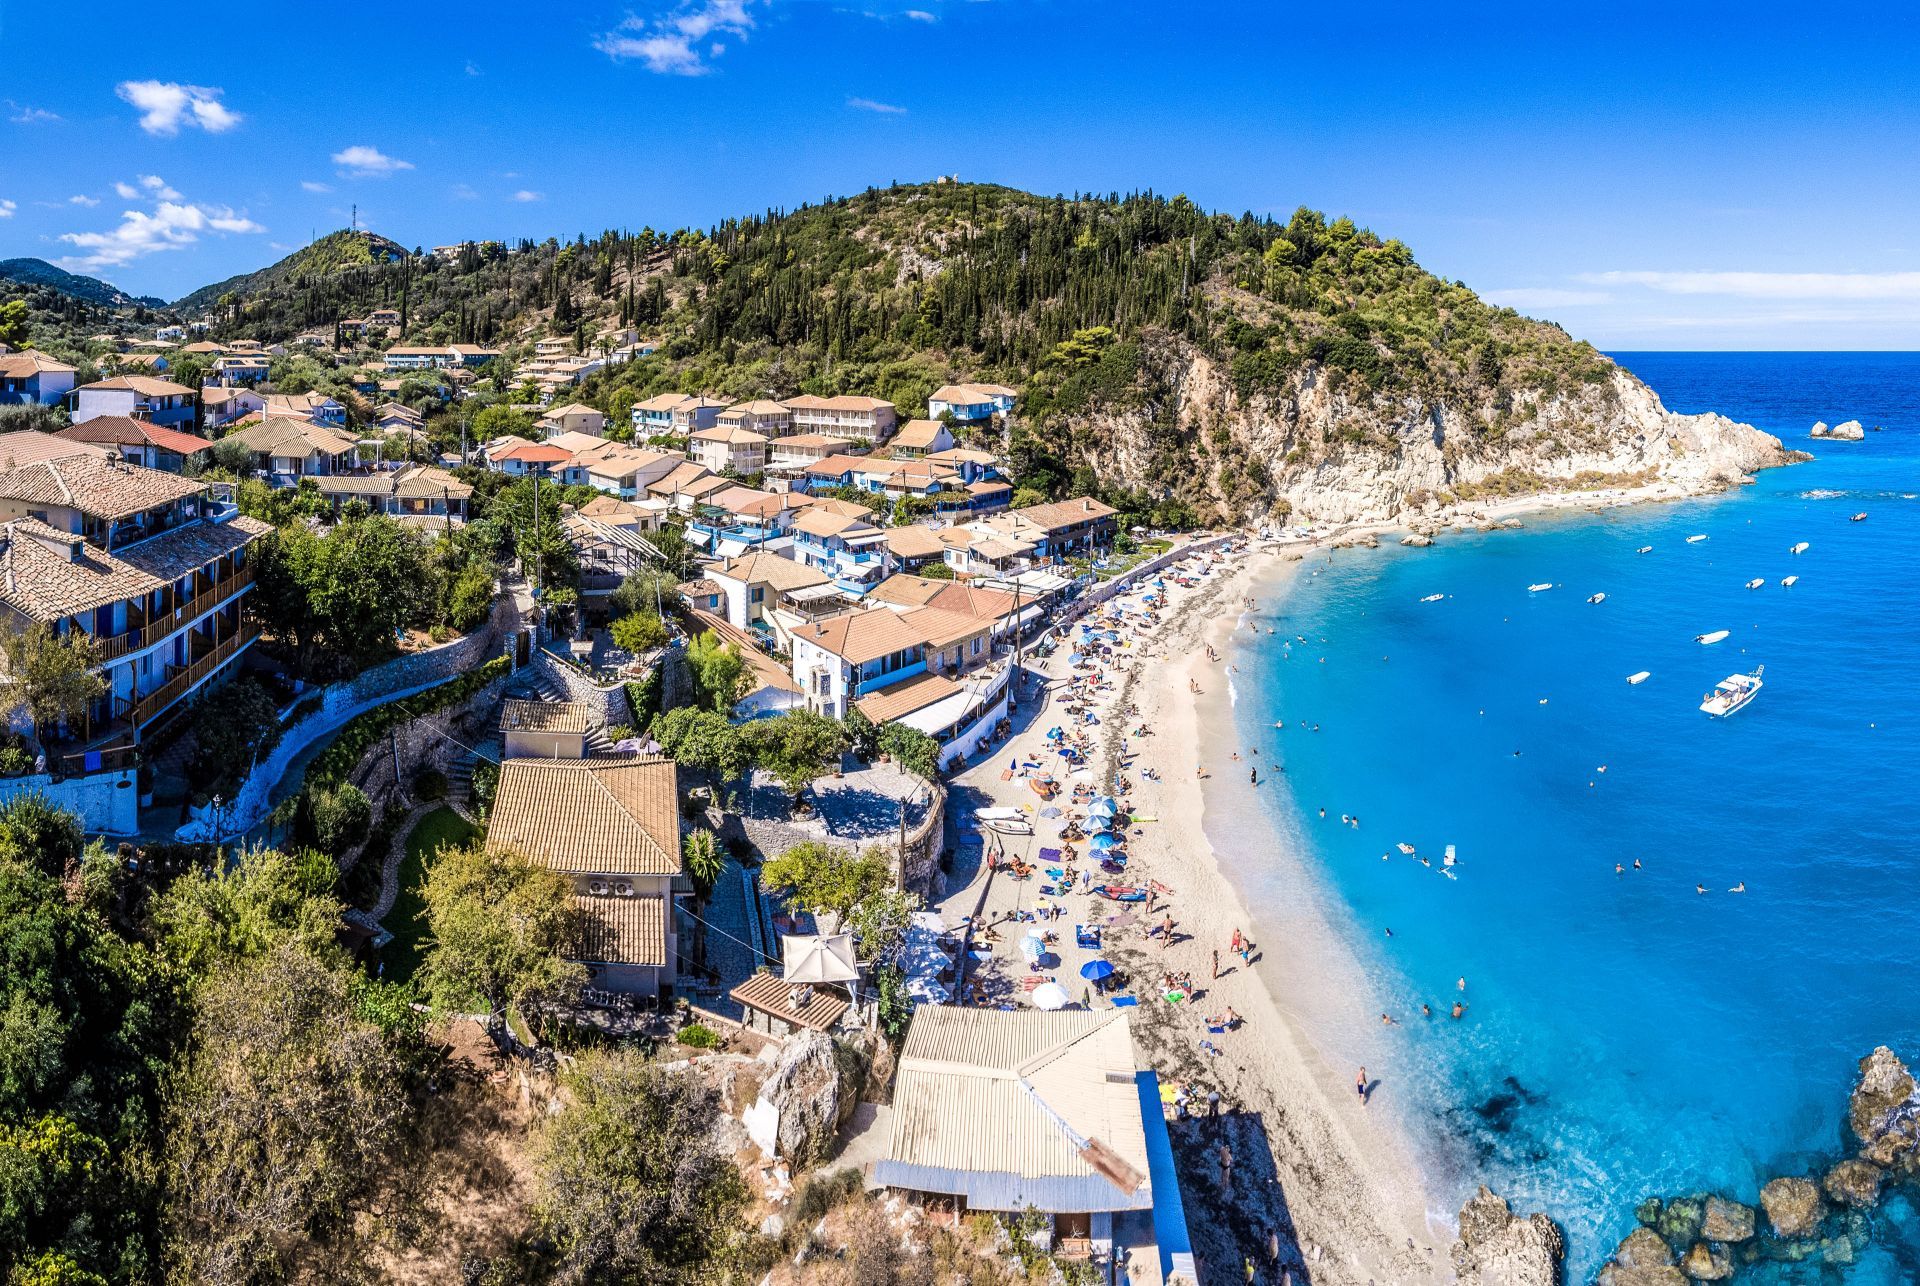 Lefkada island: Agios Nikitas village and beach resort